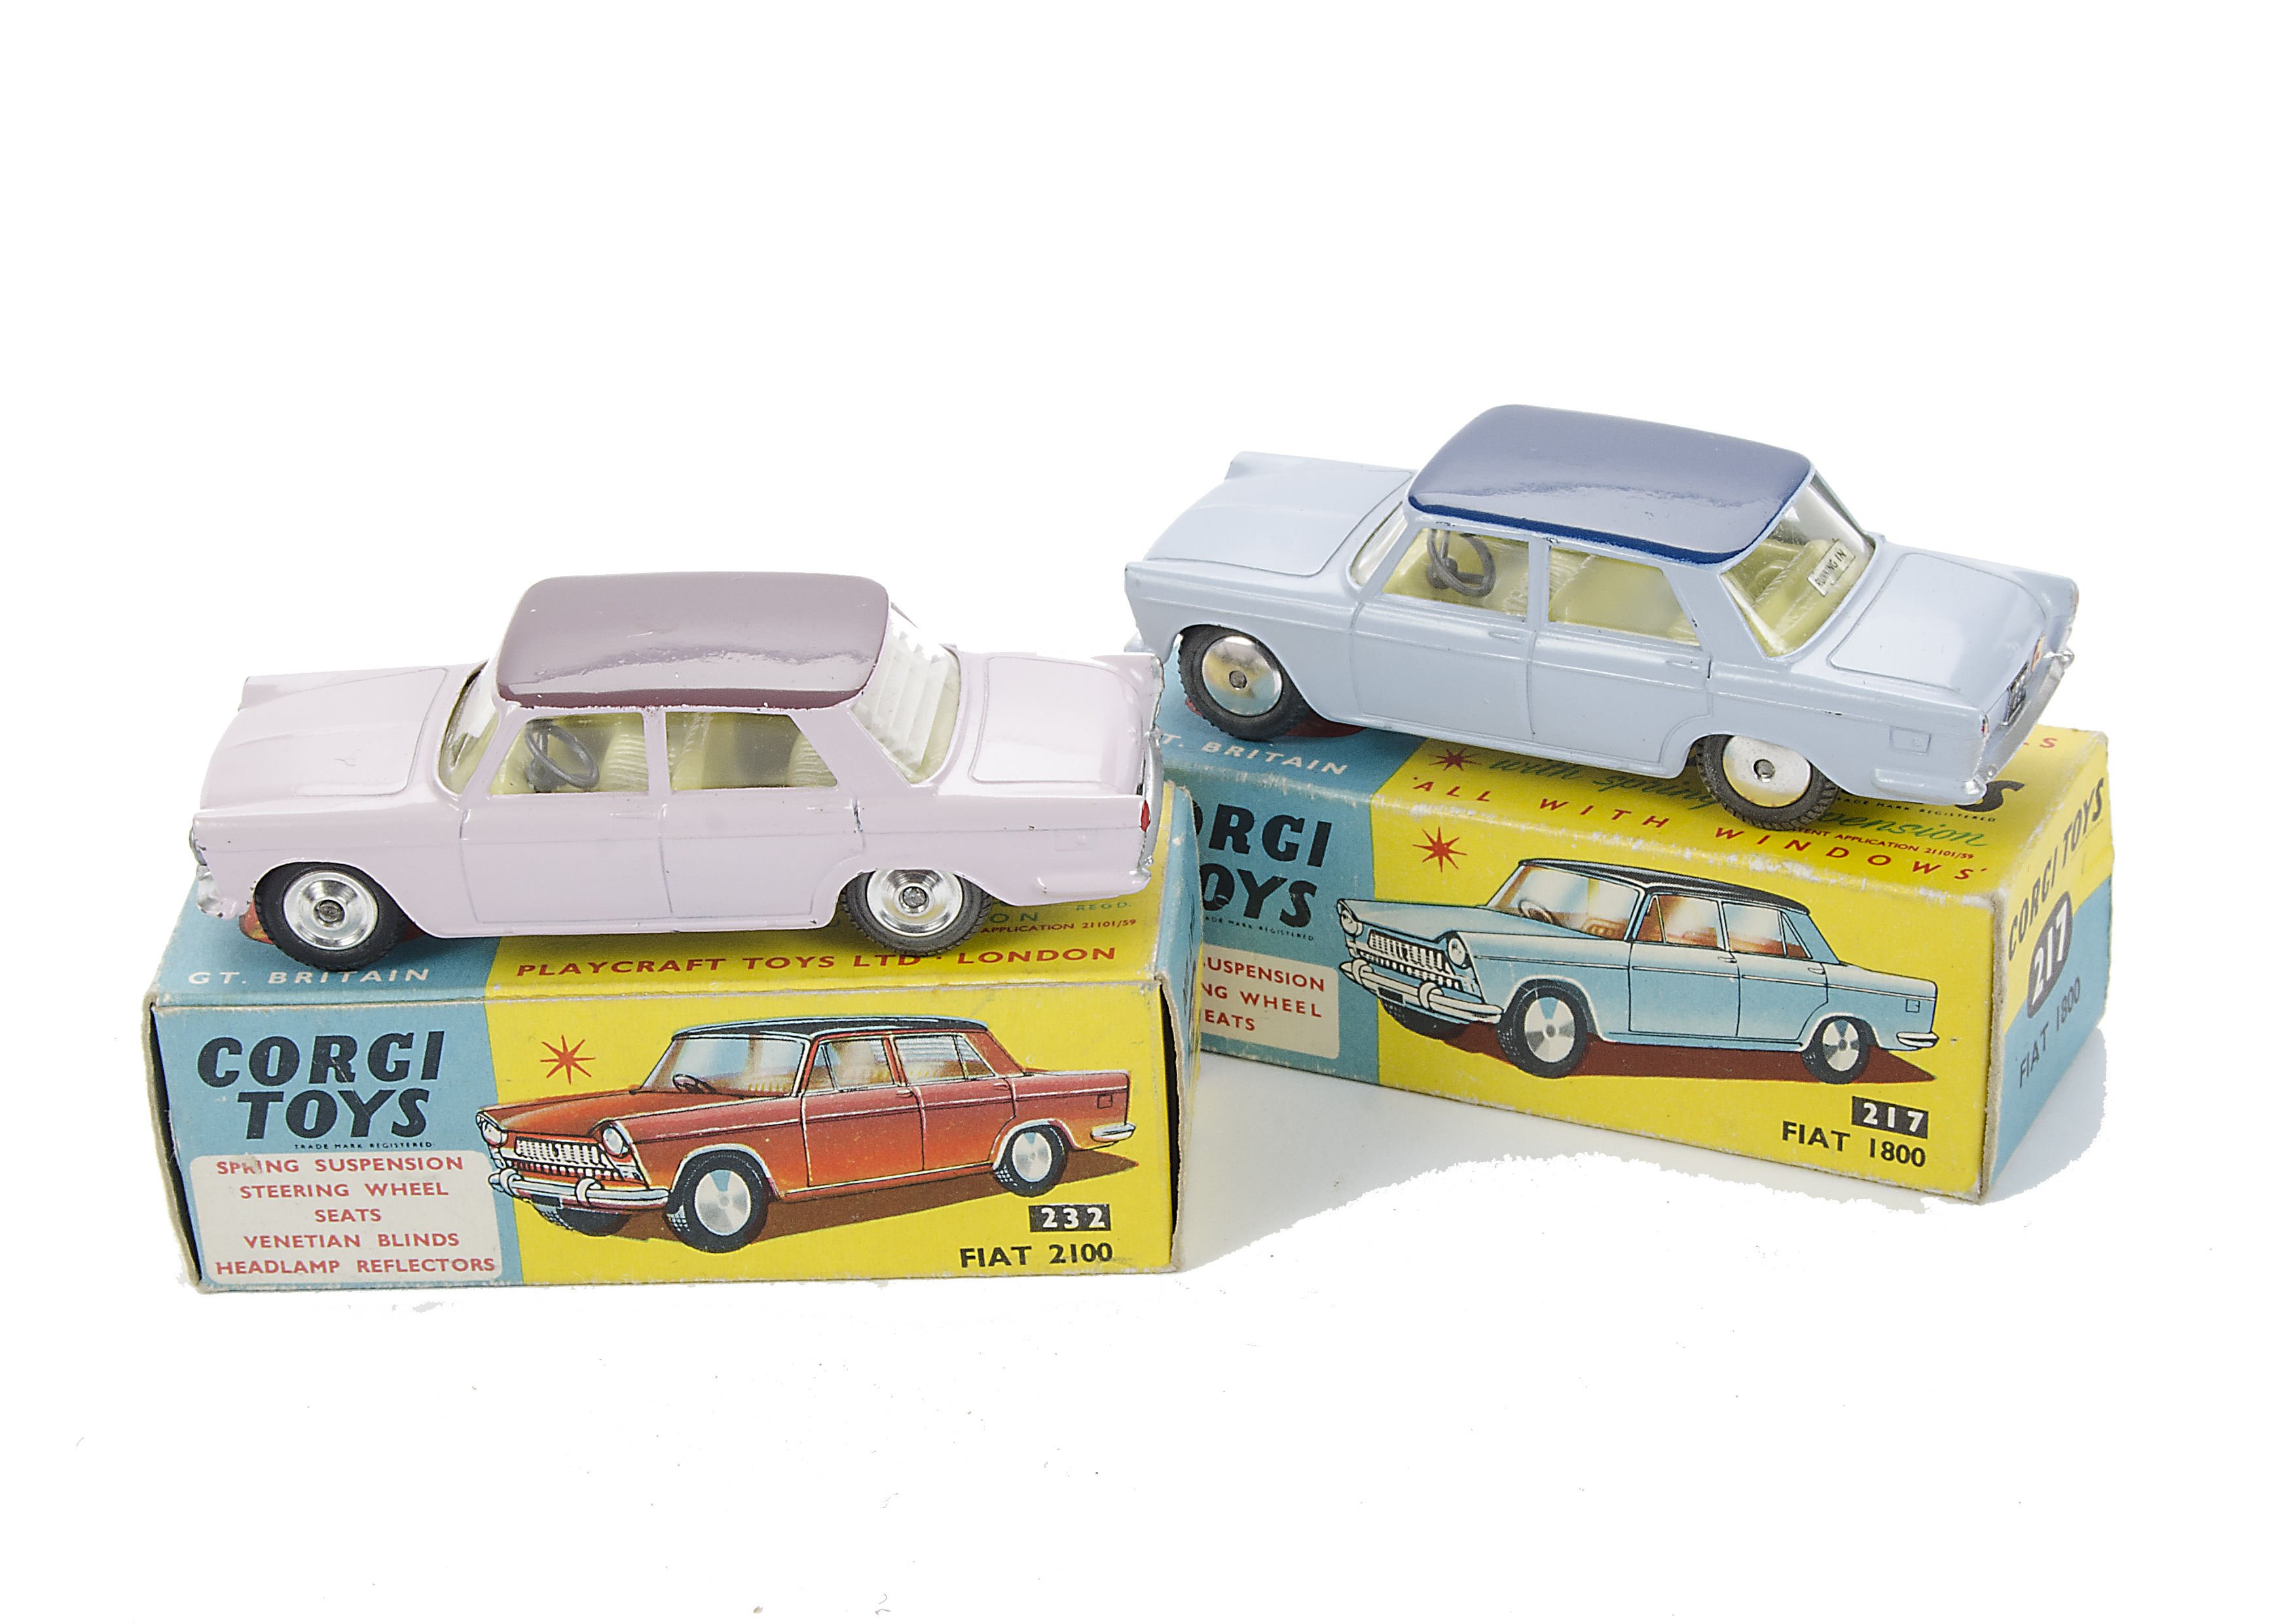 Fiat by Corgi Toys, 232 Fiat 2100, pale pink, mauve roof, 217 Fiat 1800, light blue body, dark